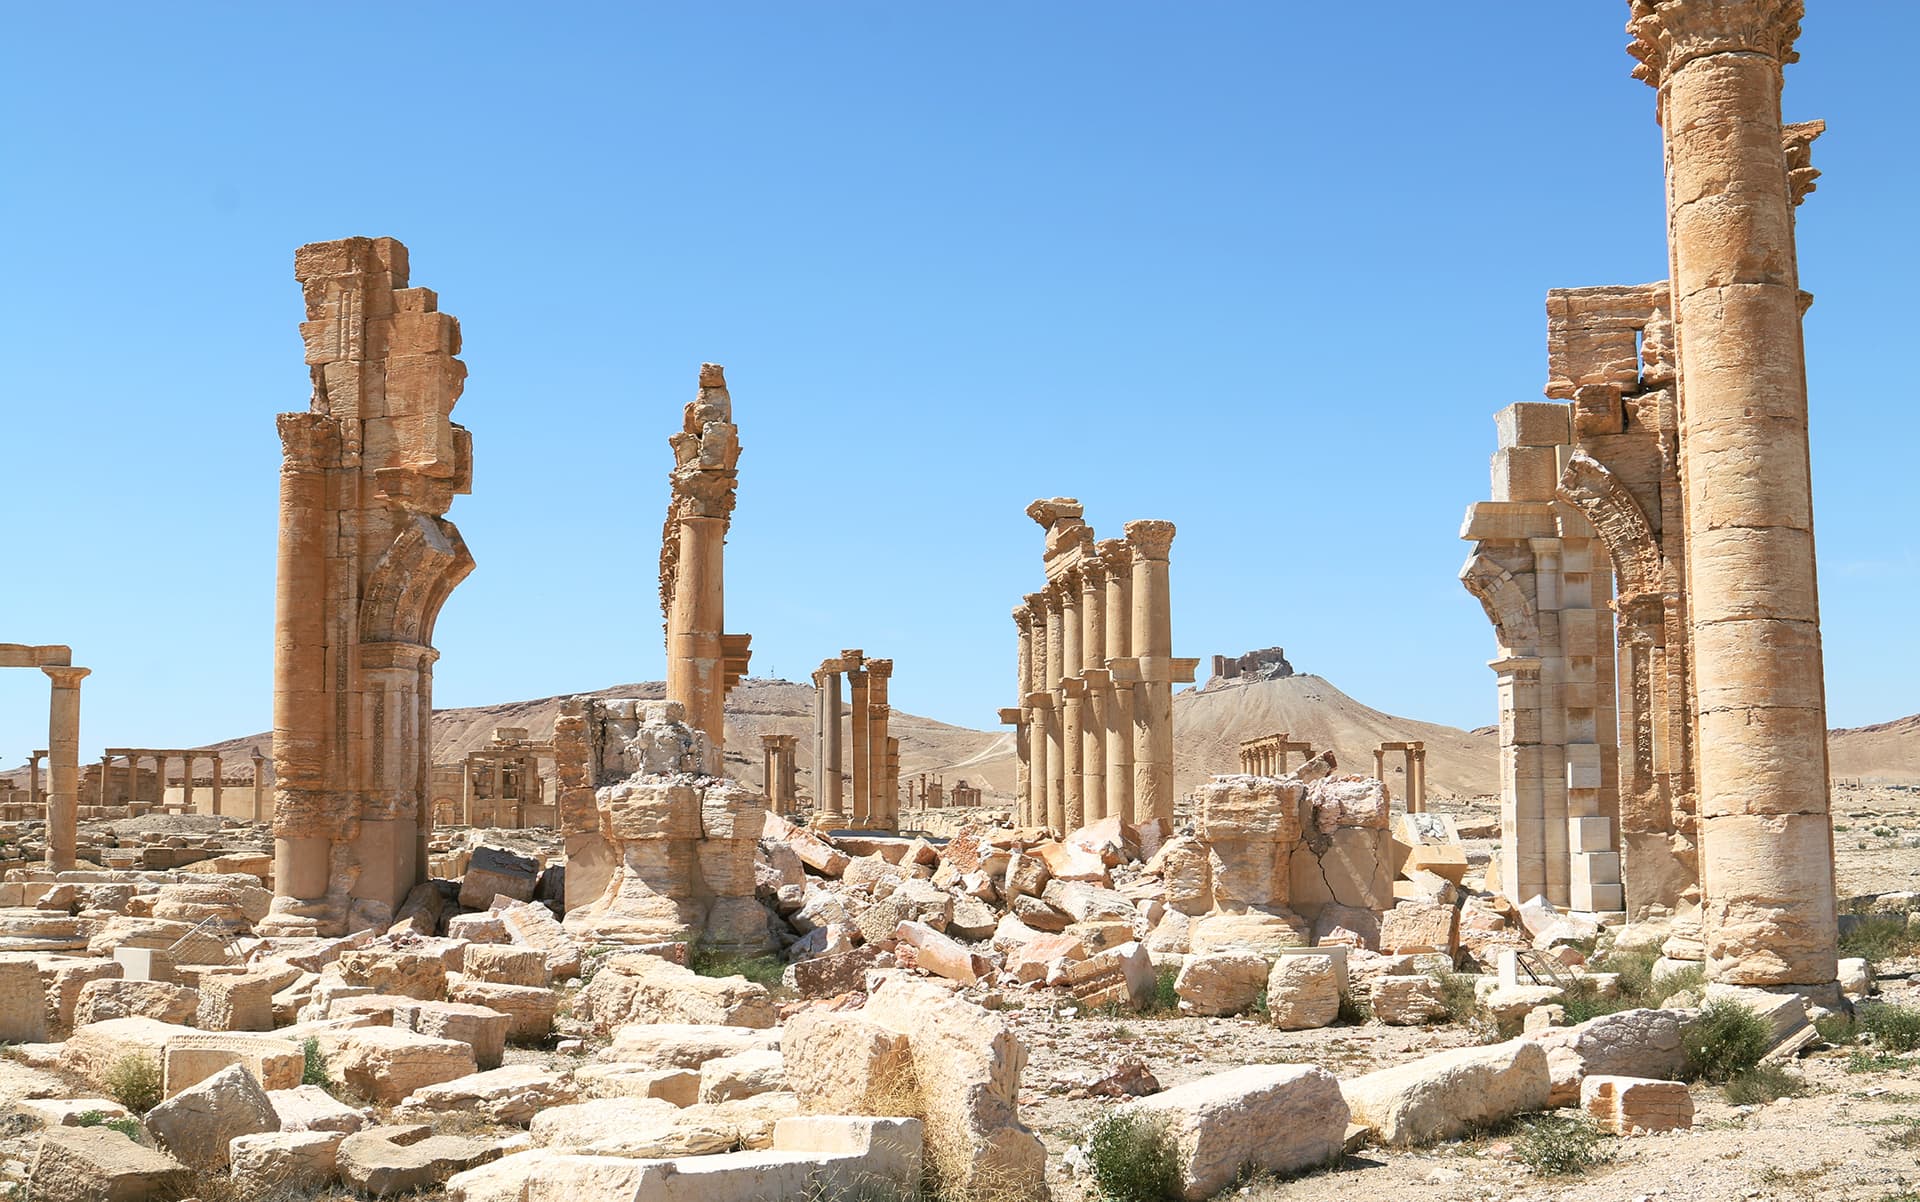 Tuhottua Palmyran argeologista aluetta 2016